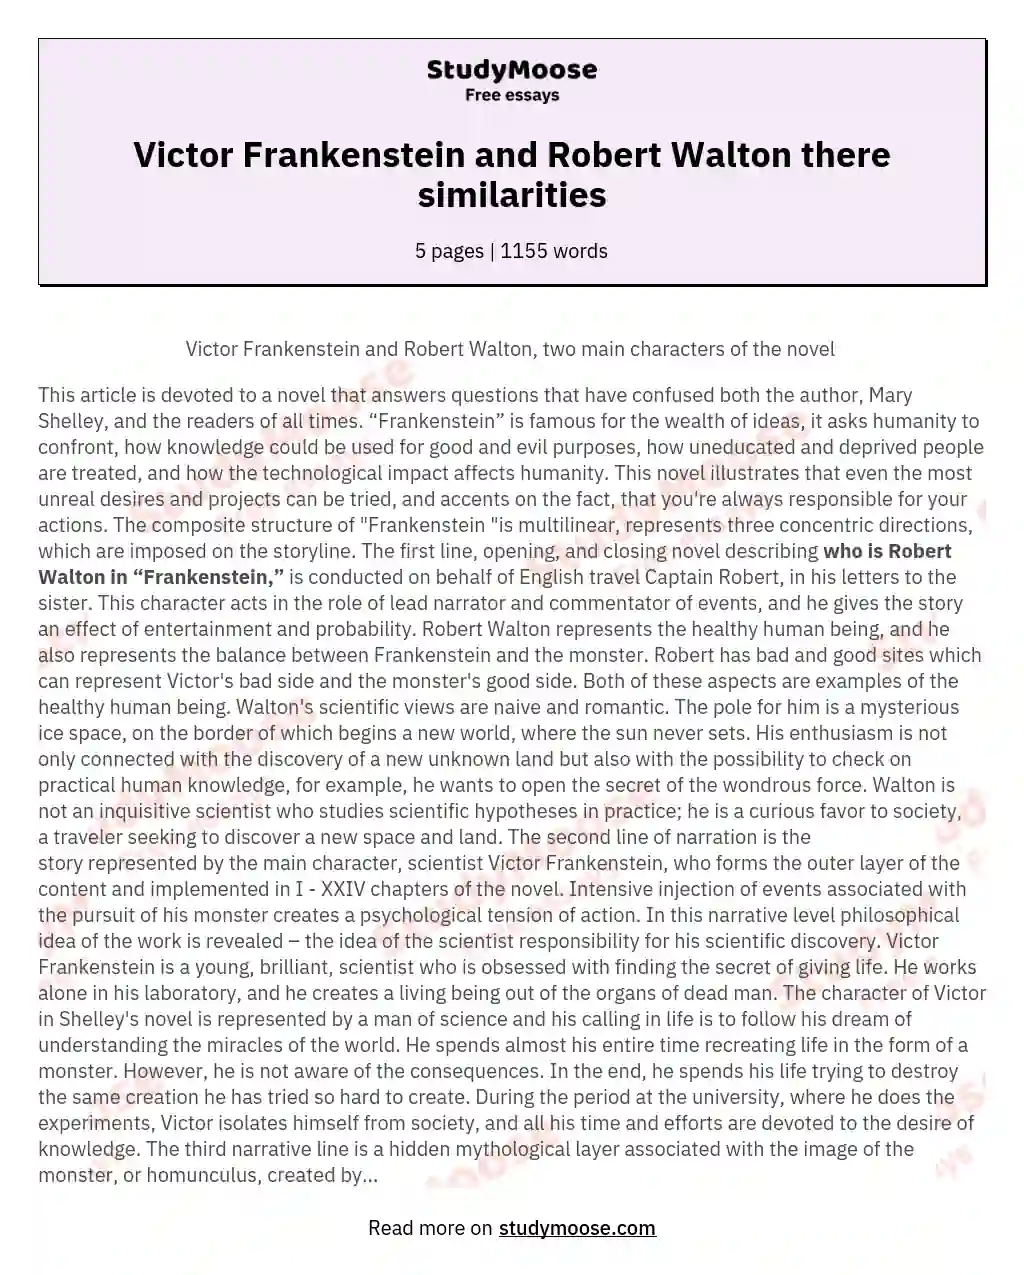 Victor Frankenstein and Robert Walton there similarities essay